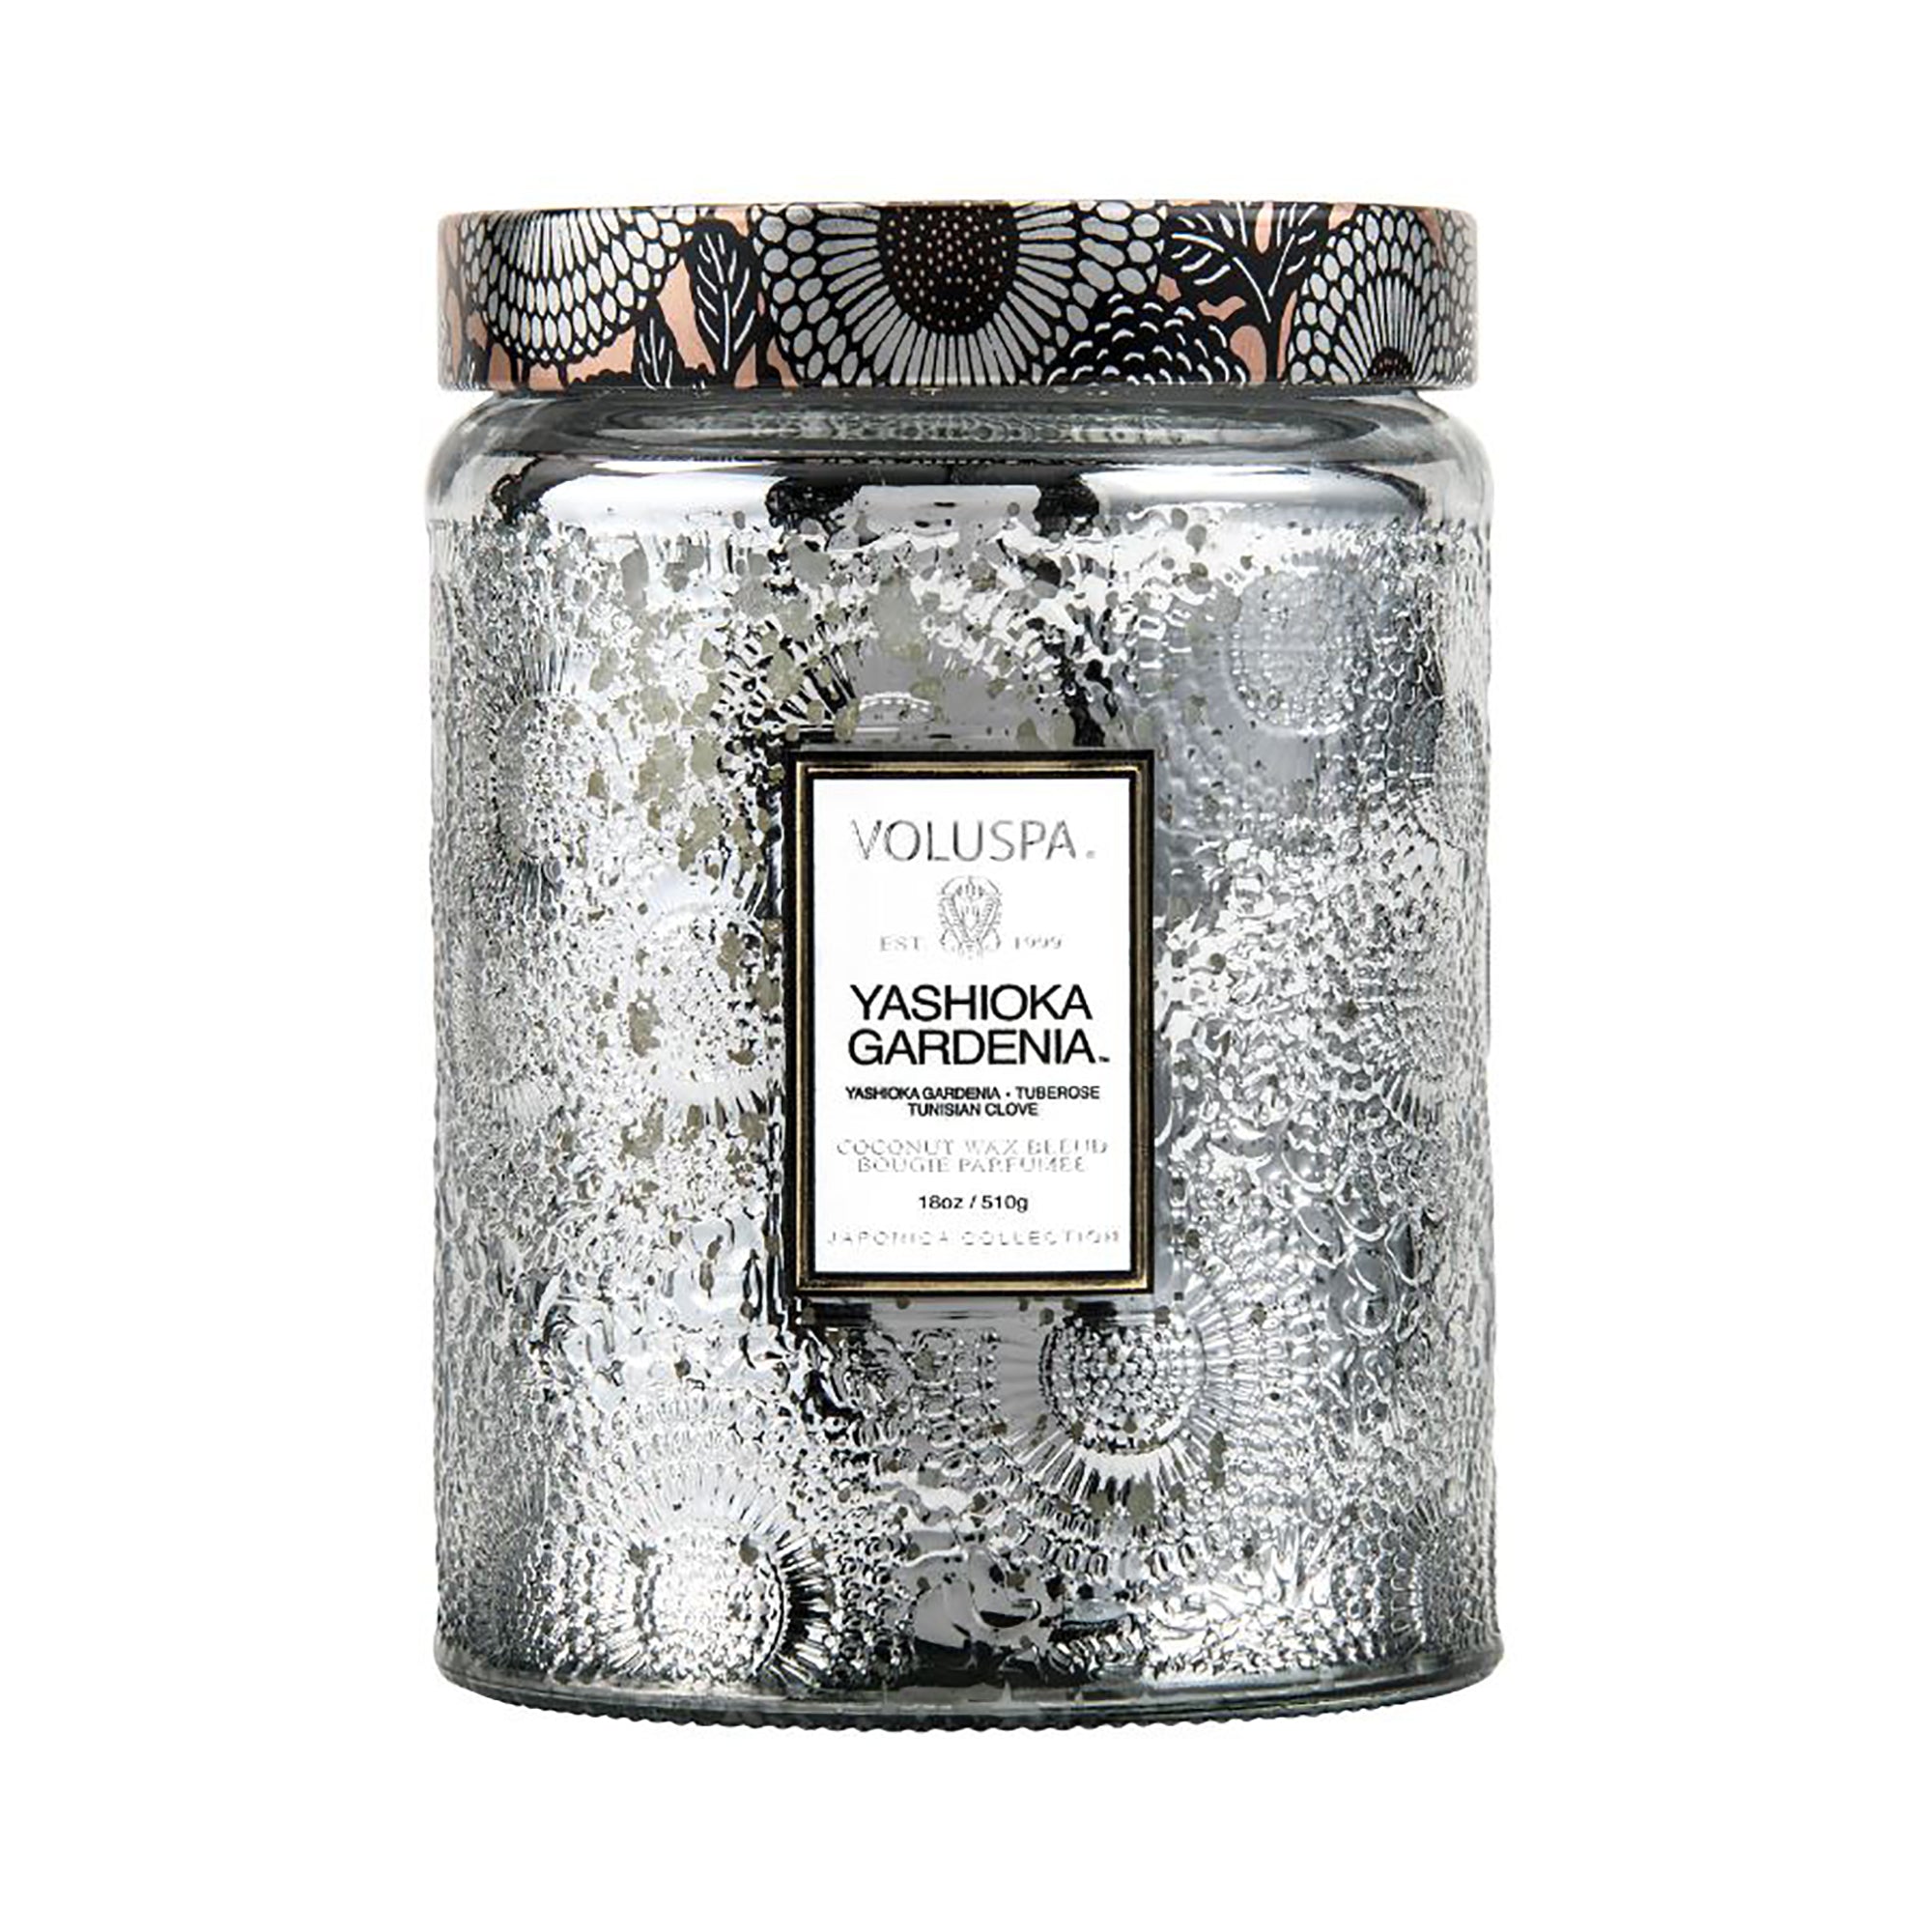 Voluspa Japonica Large Jar Candle 18oz / Yashioka Gardenia